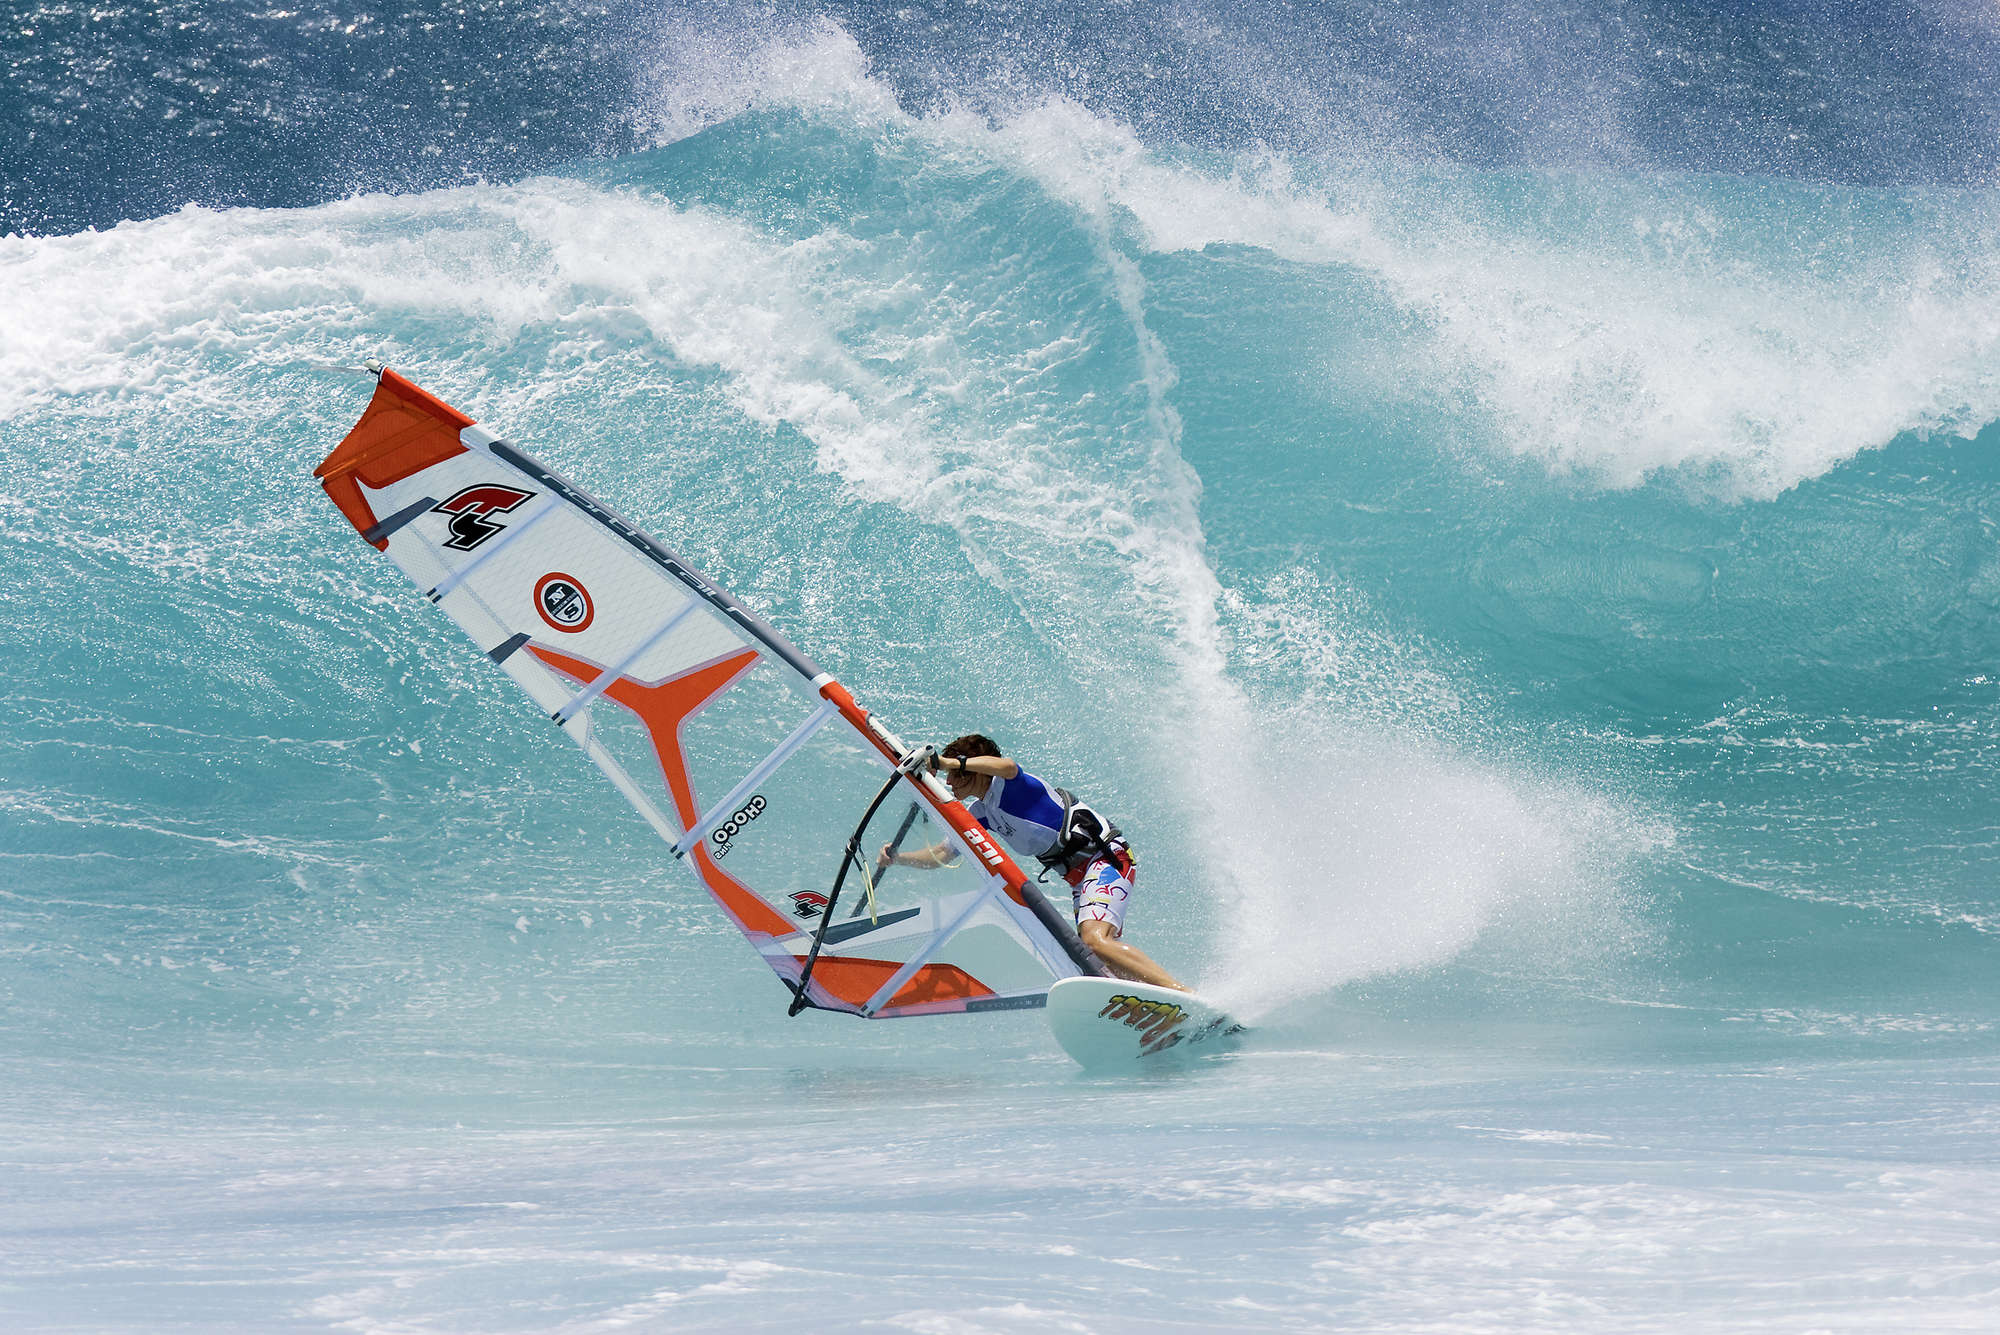             Fototapete Meer mit Surfer – Premium Glattvlies
        